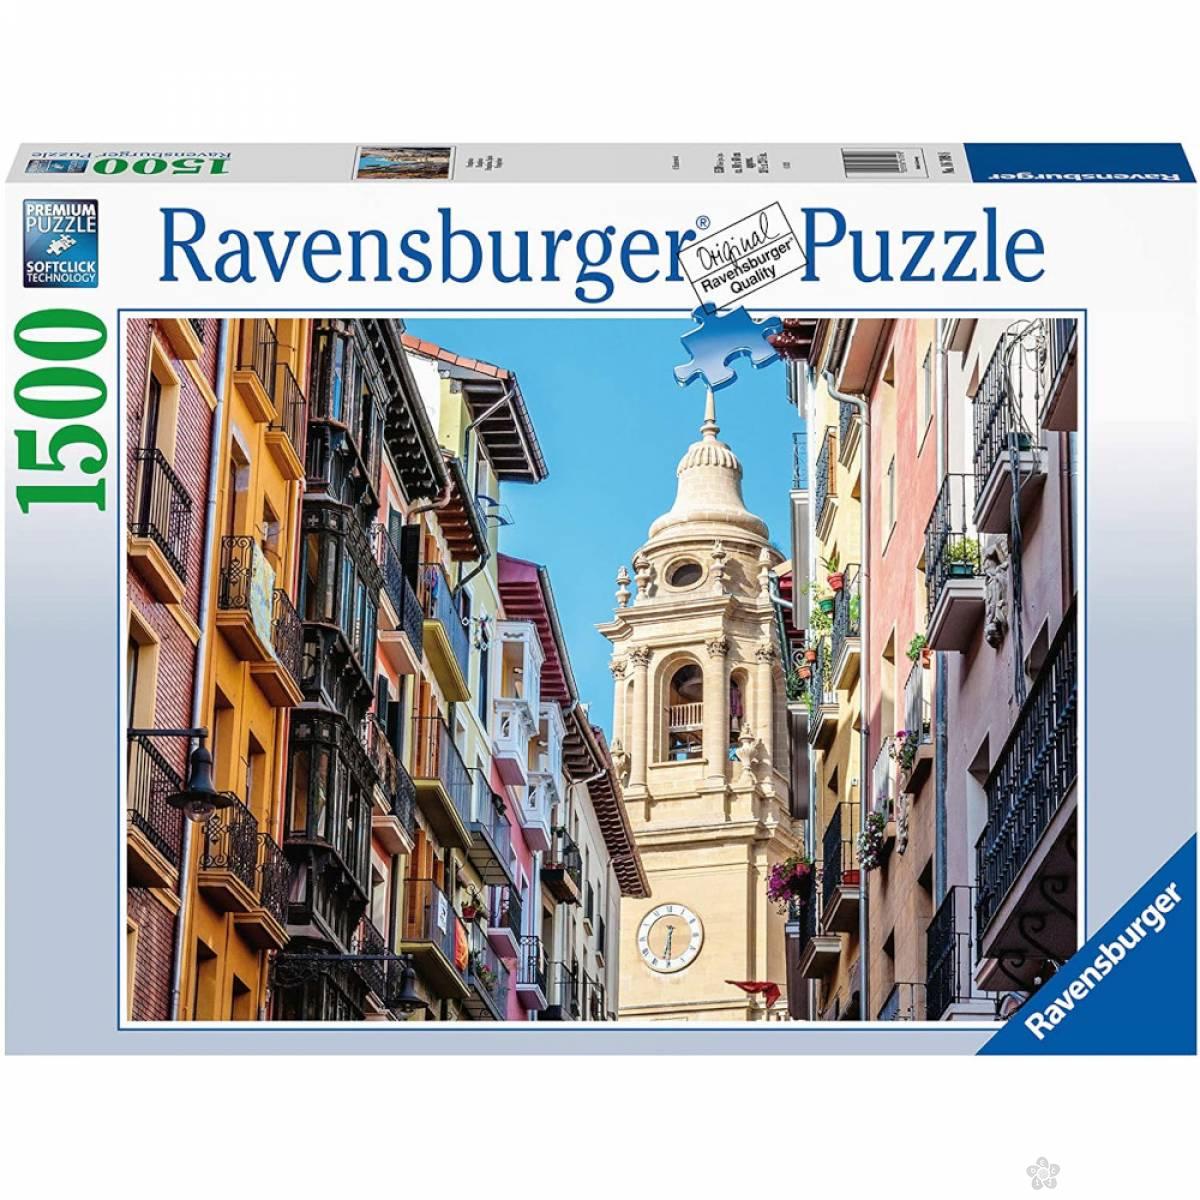 Ravensburger puzzle Pamplona RA16709 